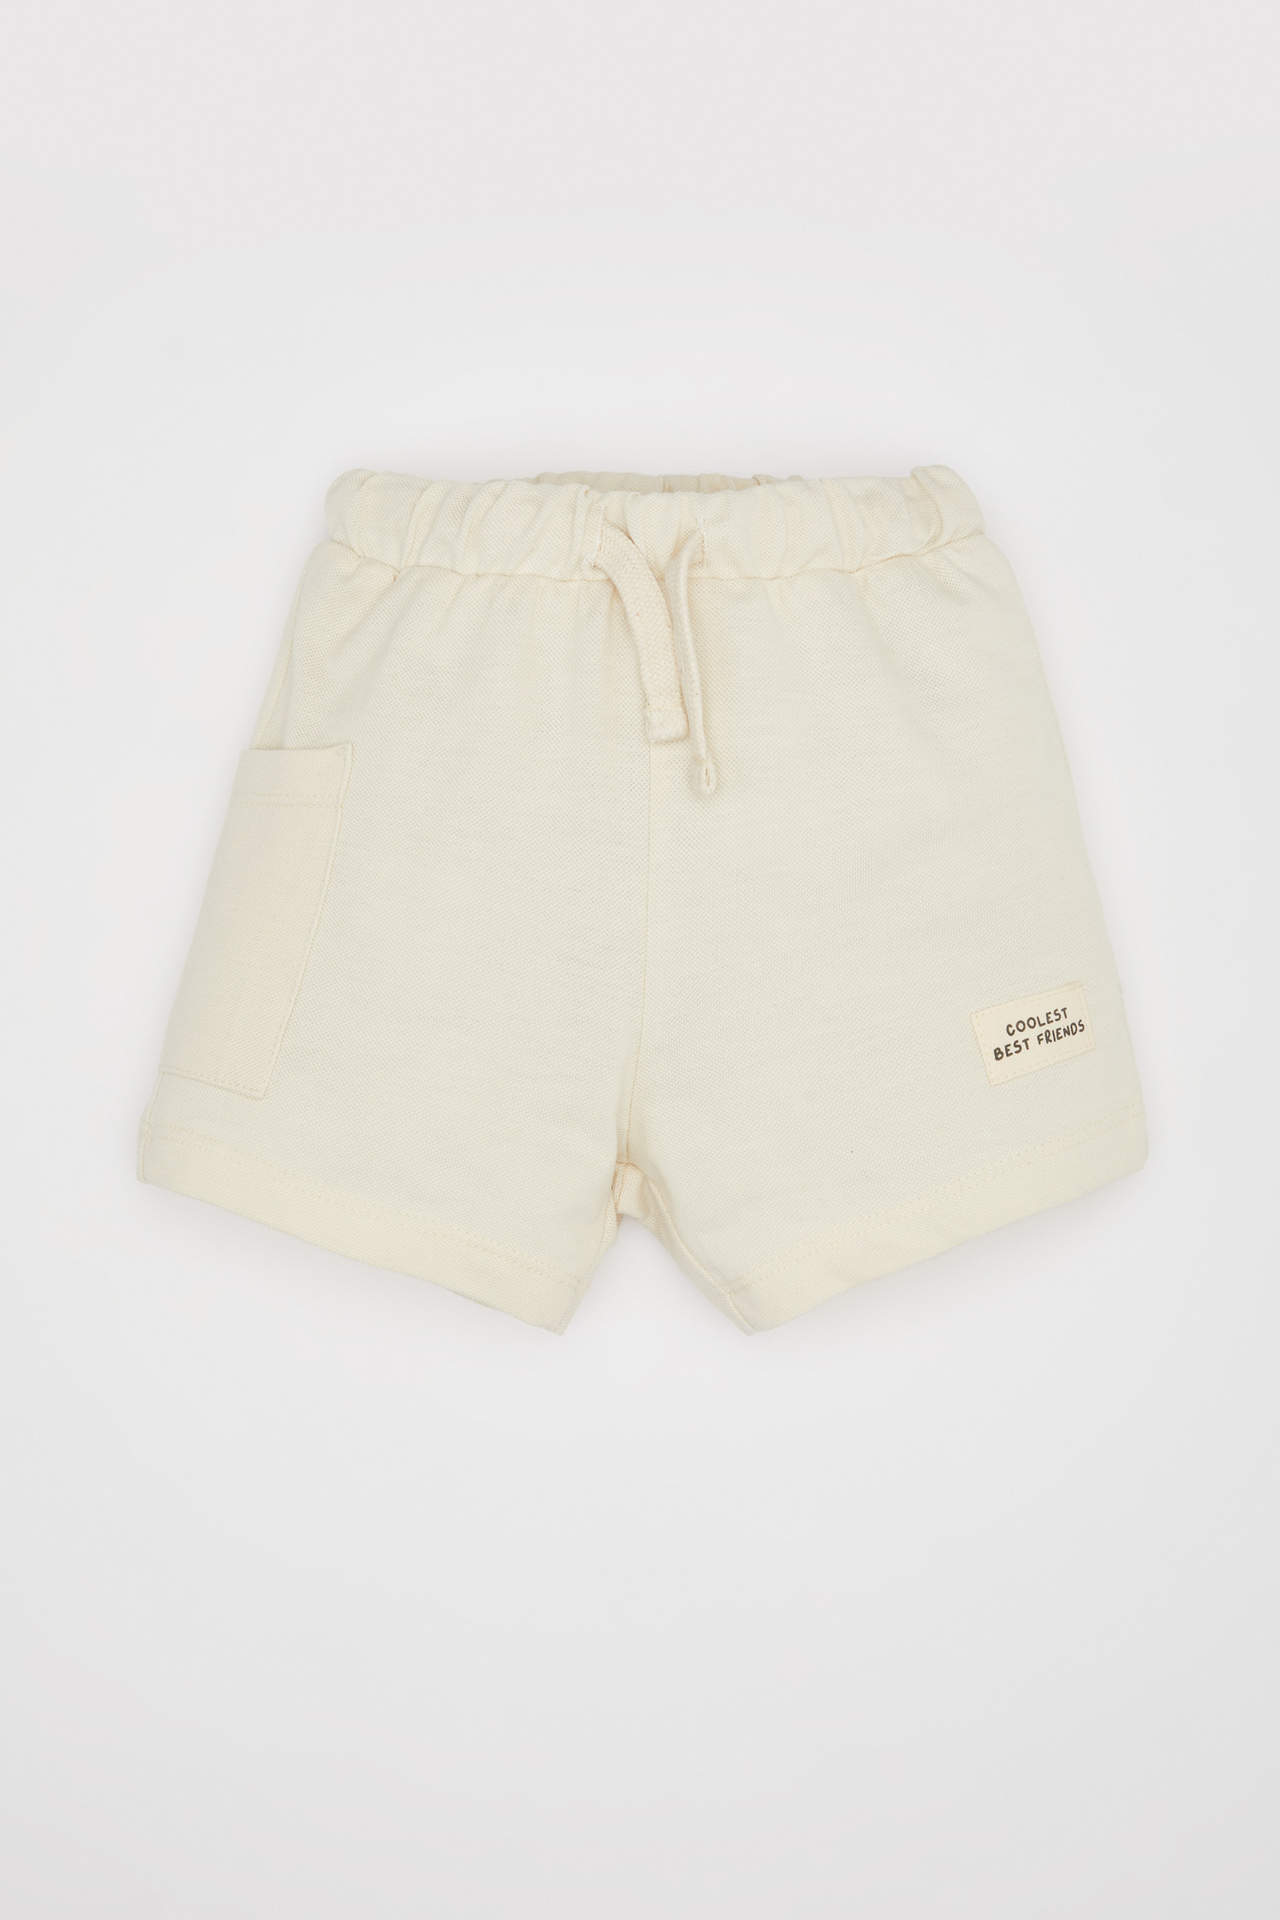 DEFACTO Baby Boy Regular Fit Label Printed Pique Shorts